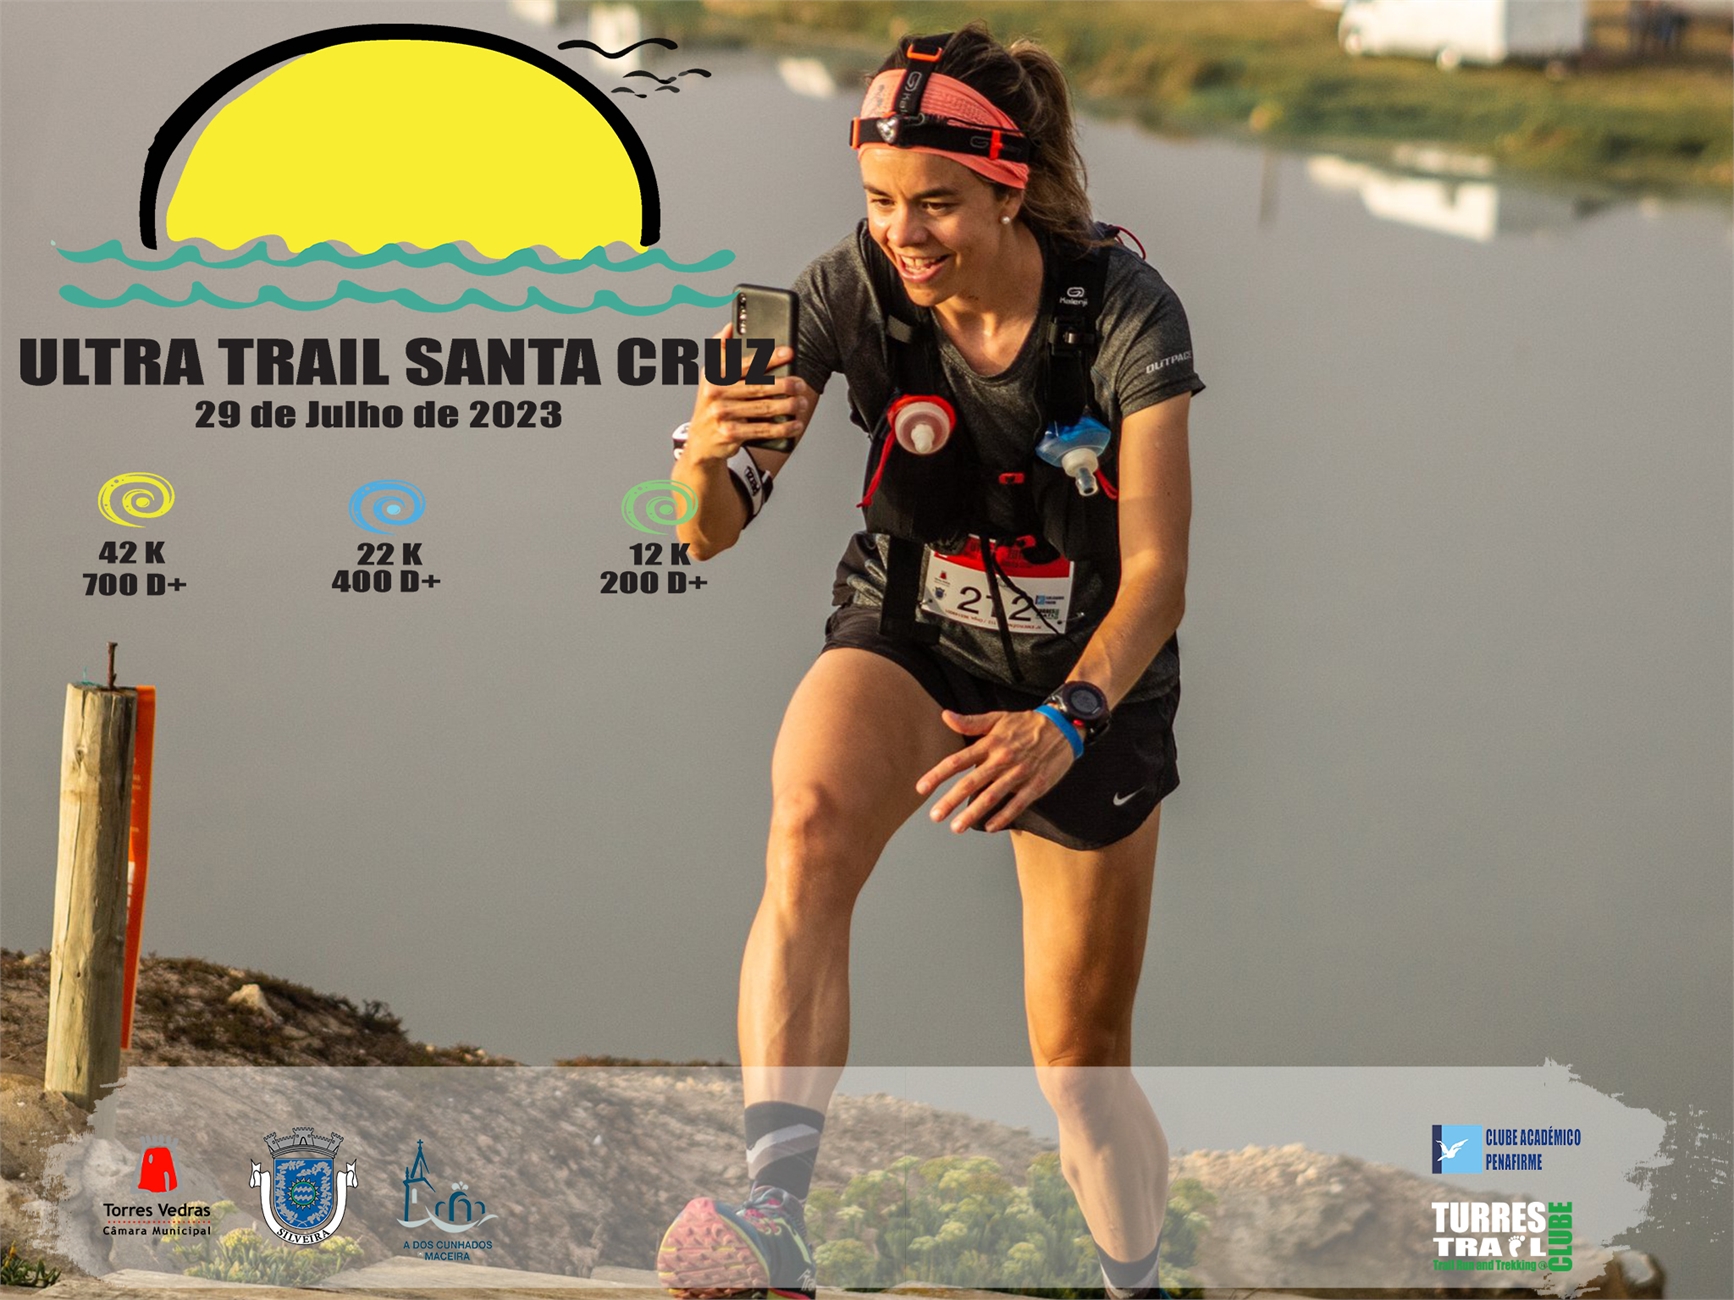 UTRSC- Ultra Trail Santa Cruz 2023 - Eventos - TurresEvents